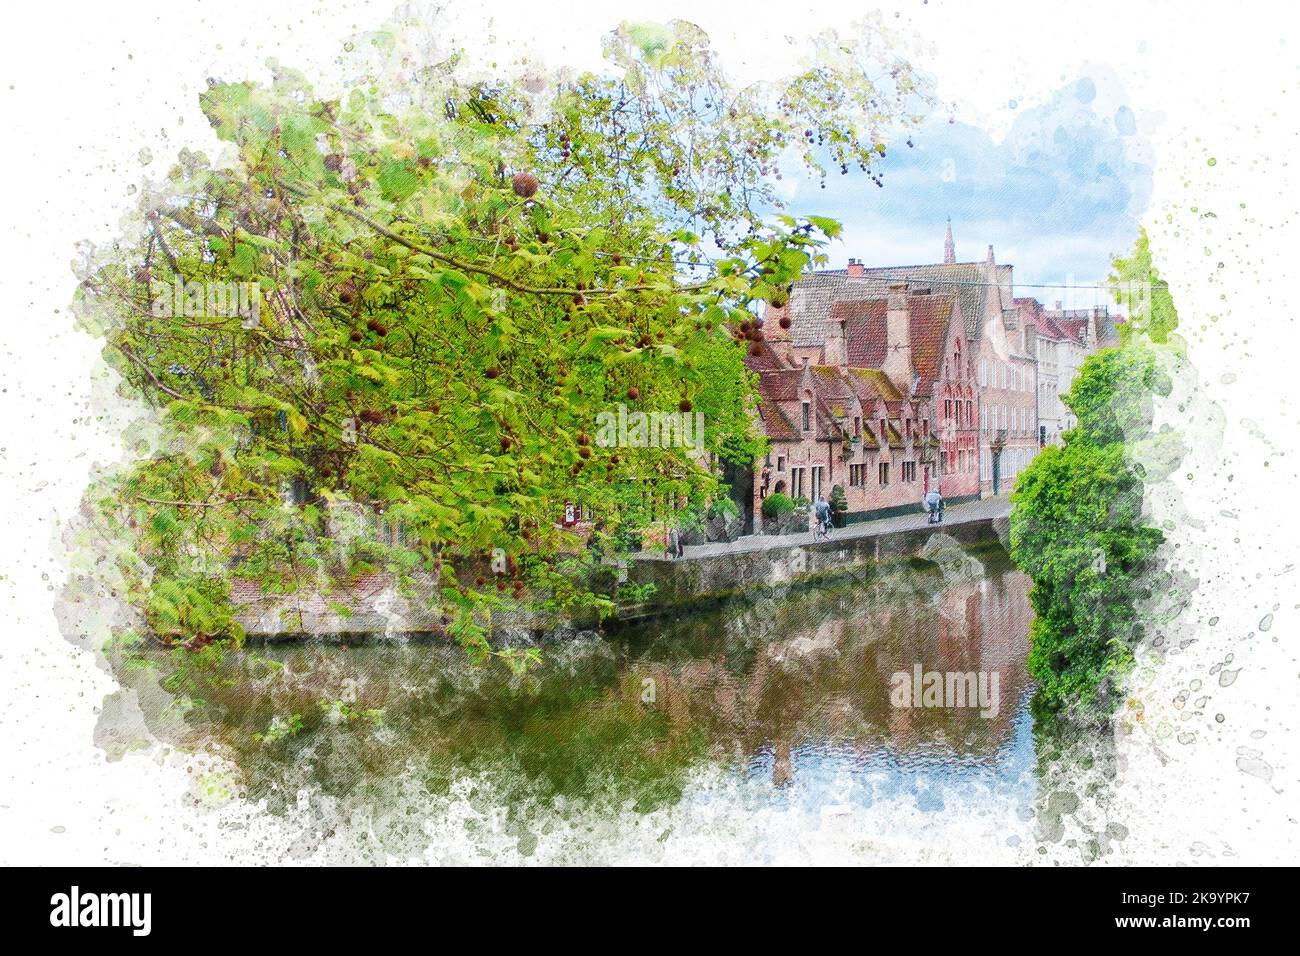 Stadtbild Brügge Aquarell Illustration Malerei auf Leinwand Rahmen Textur. Brügge Belgien Landschaft Hintergrund Stockfoto